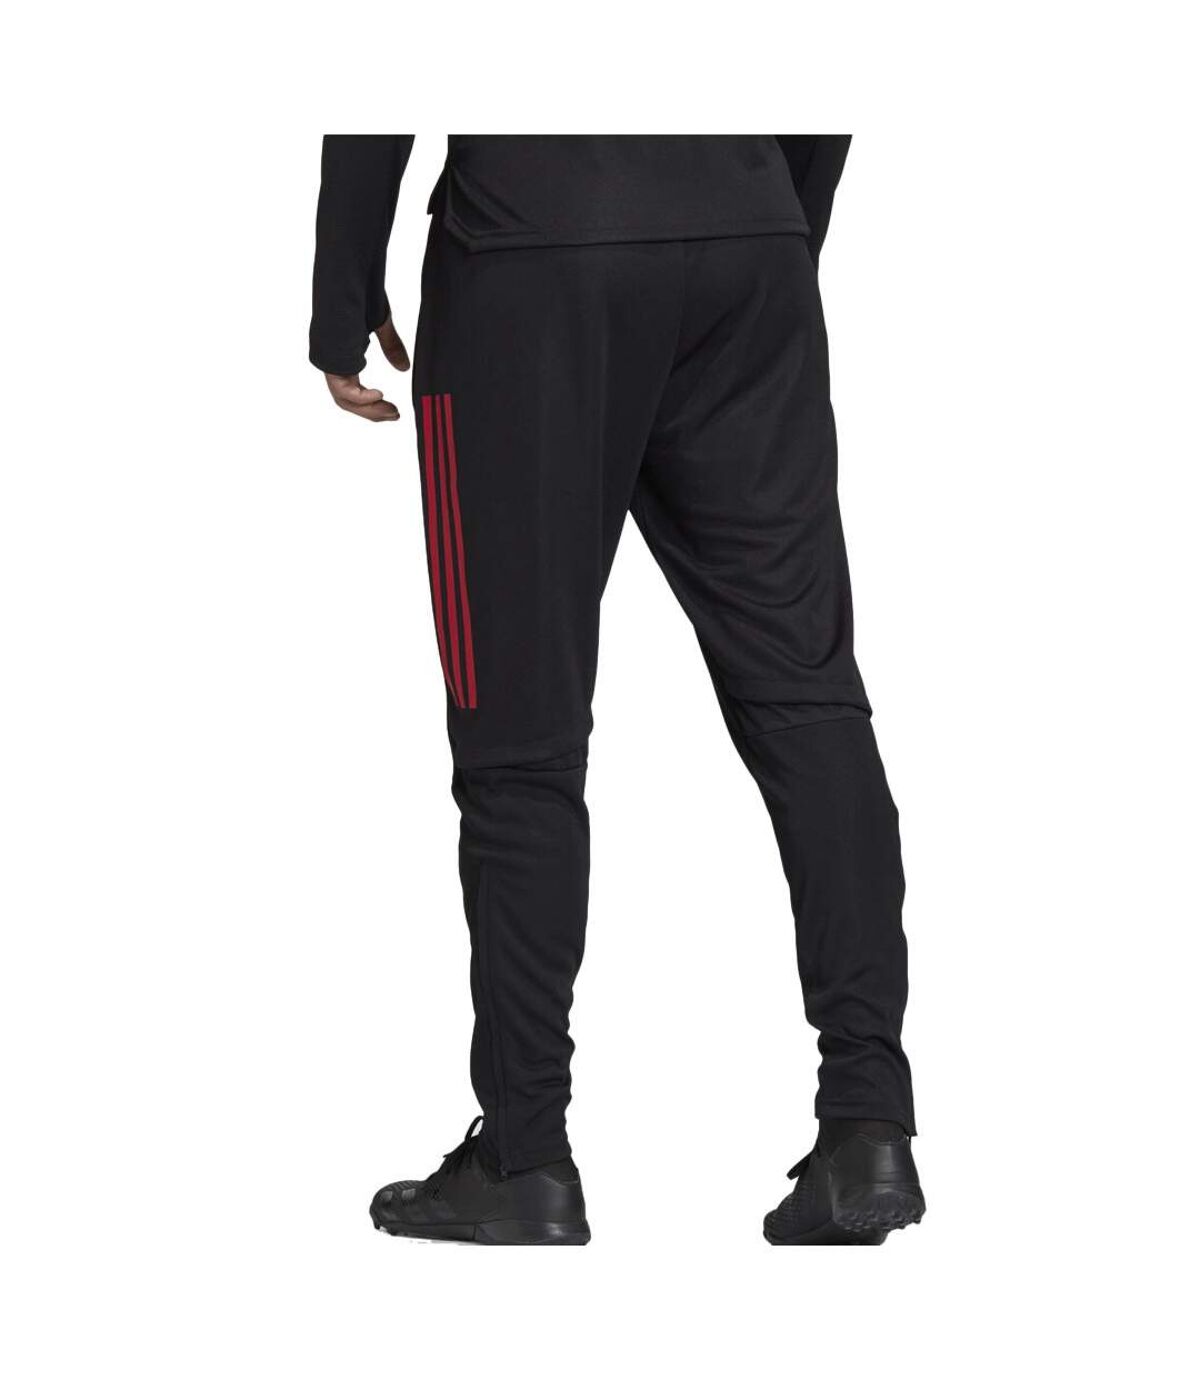 FC Bayern Jogging noir homme Adidas 2020